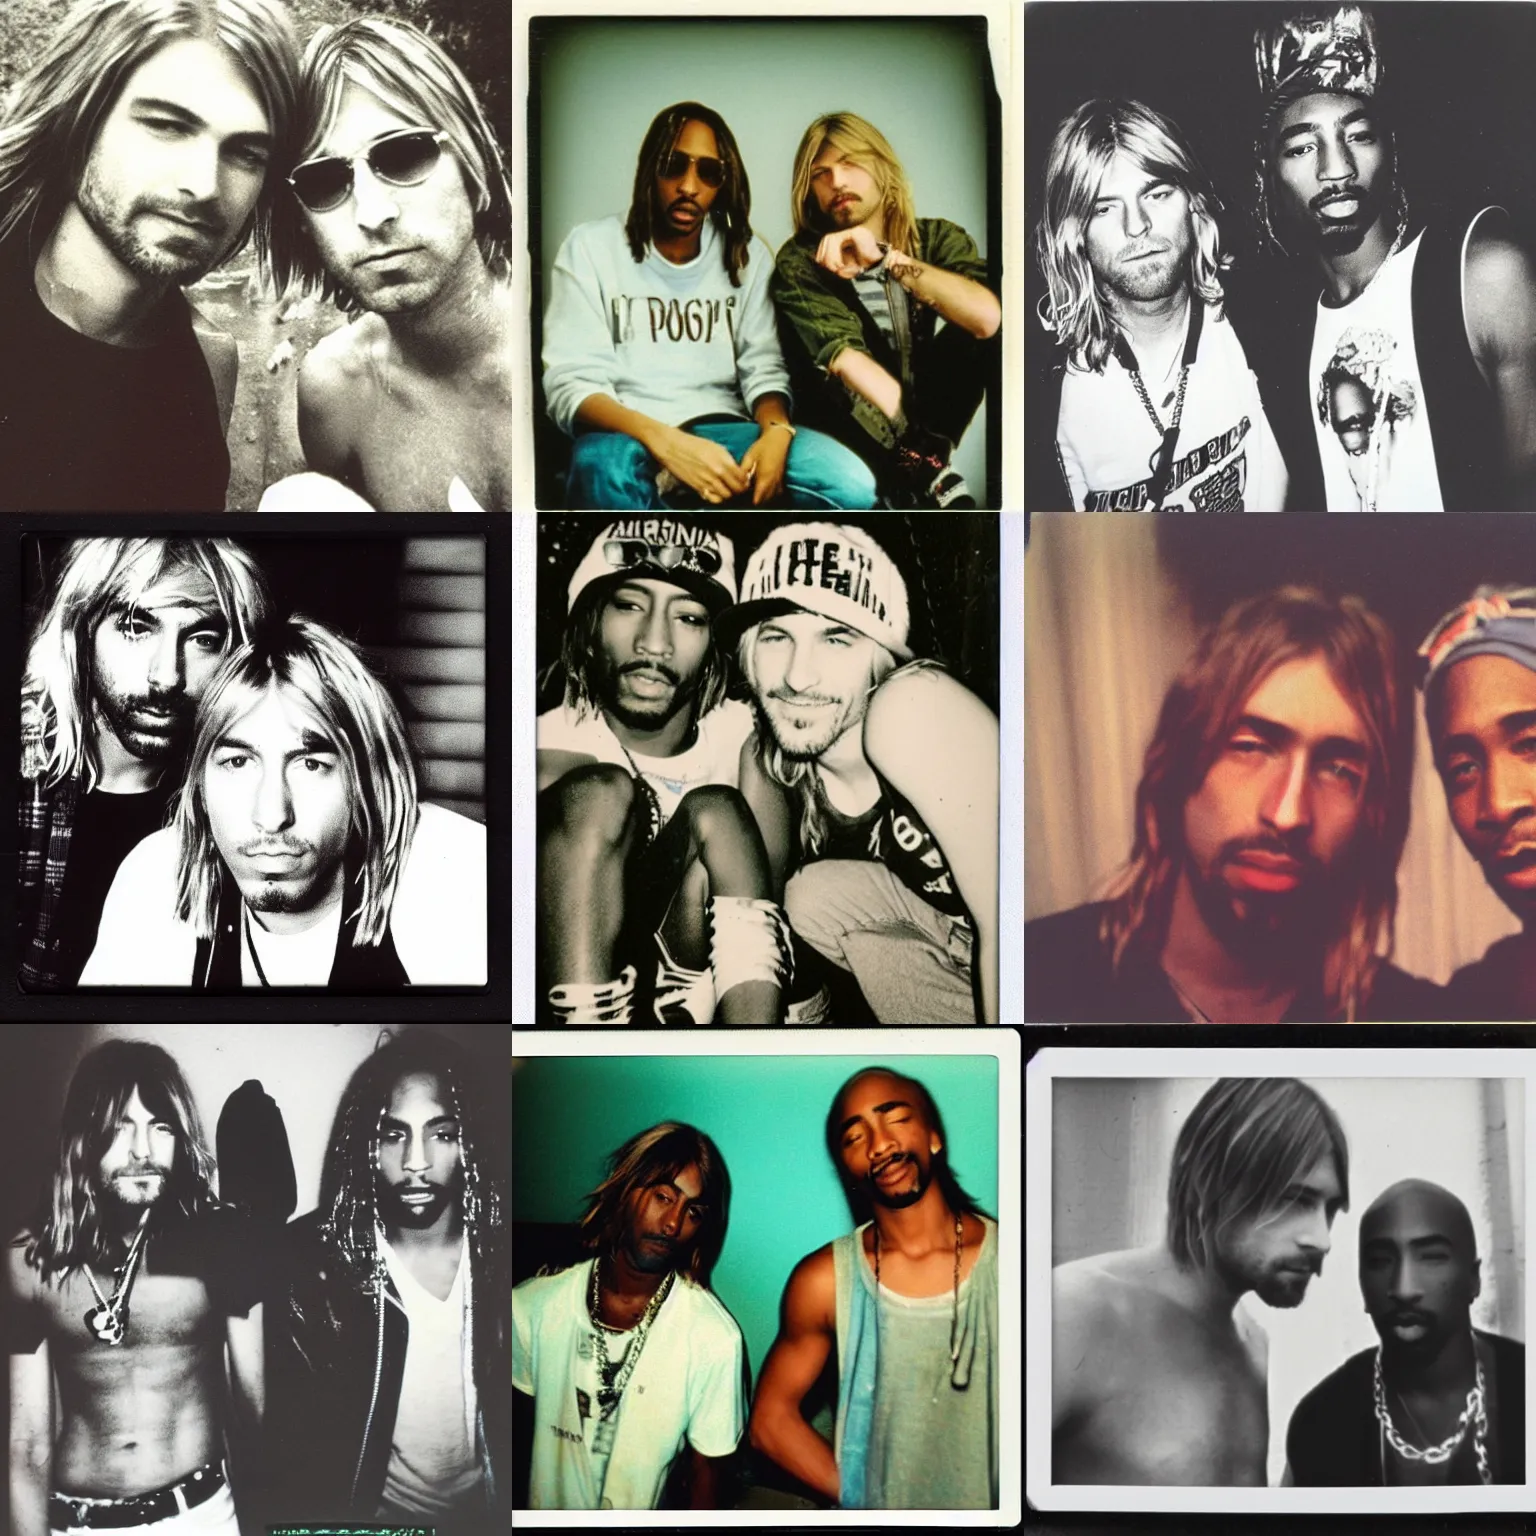 Prompt: polaroid of Kurt cobain and Tupac